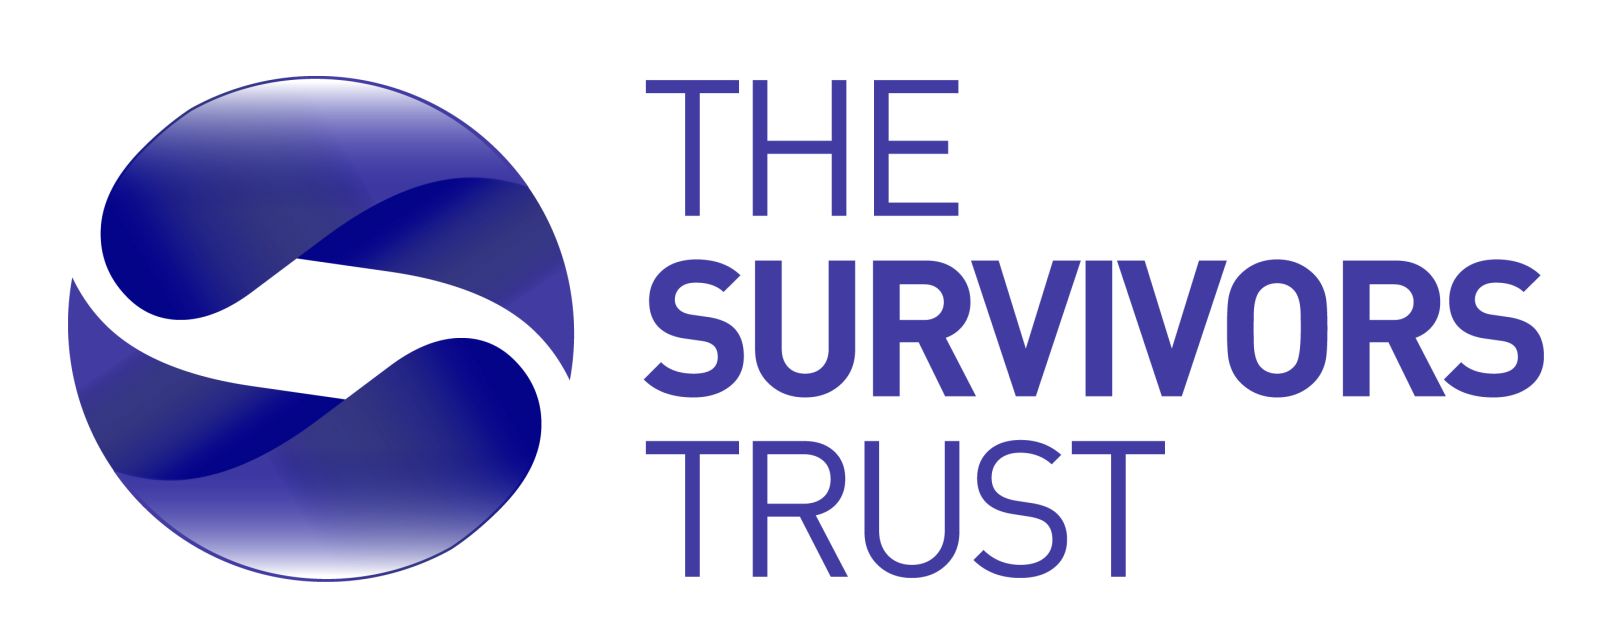 The survivors trust logo 